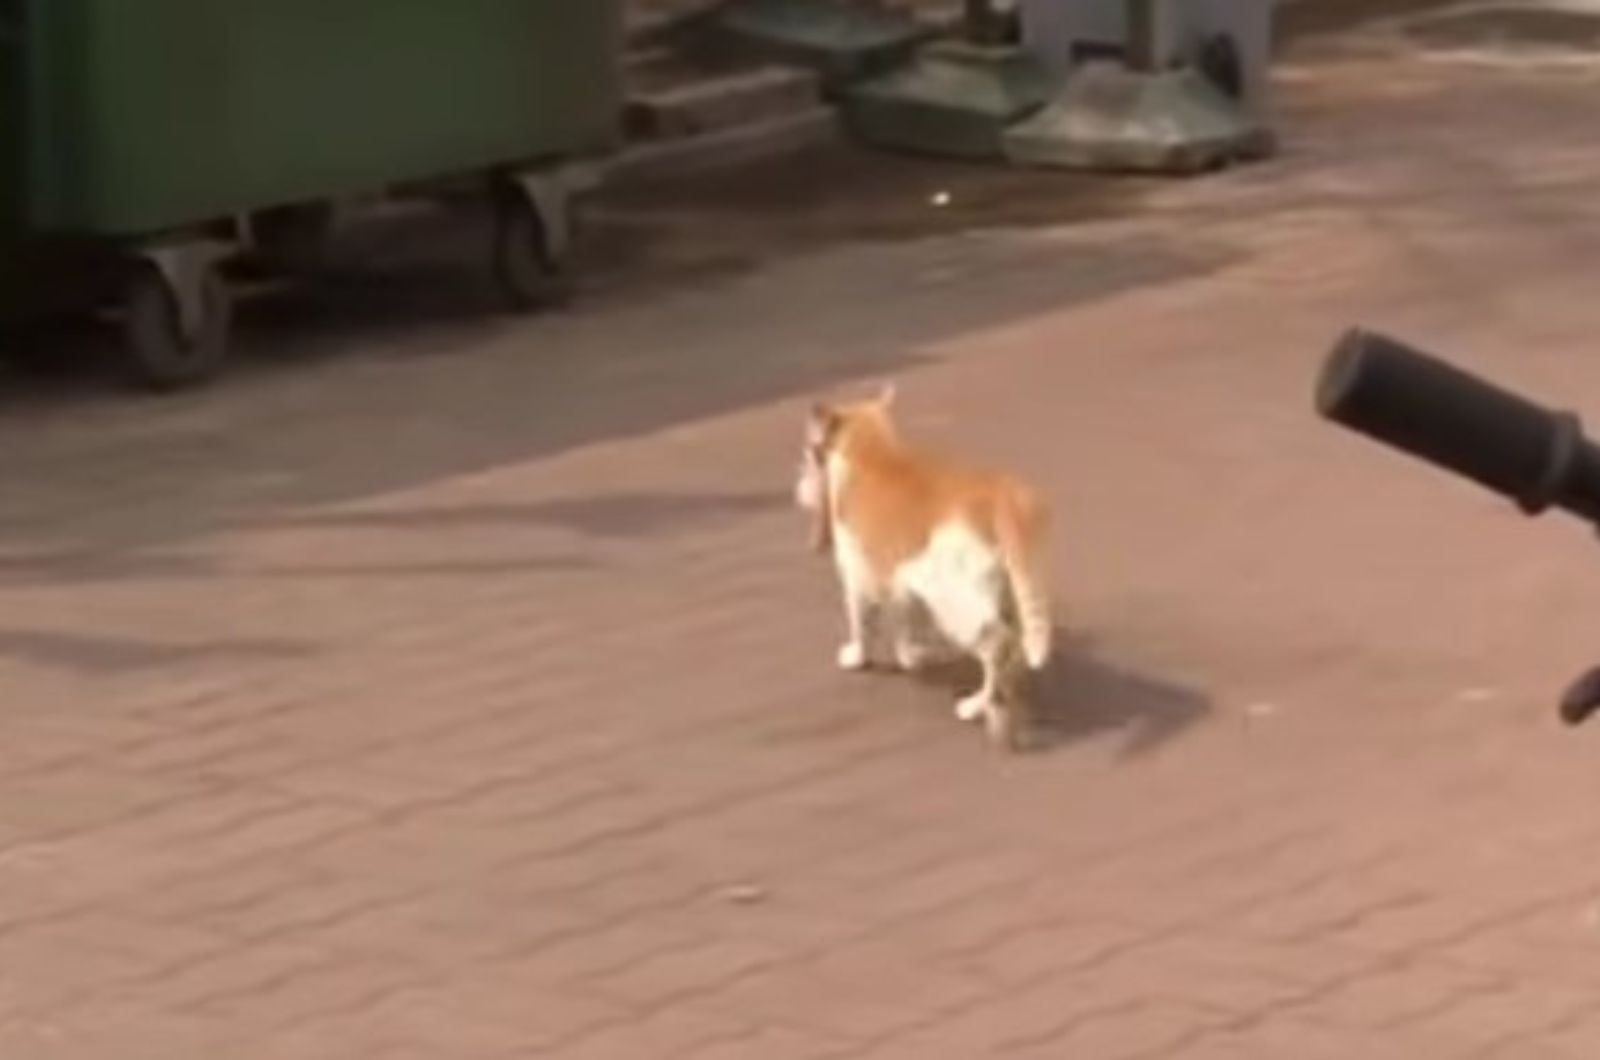 cat walking